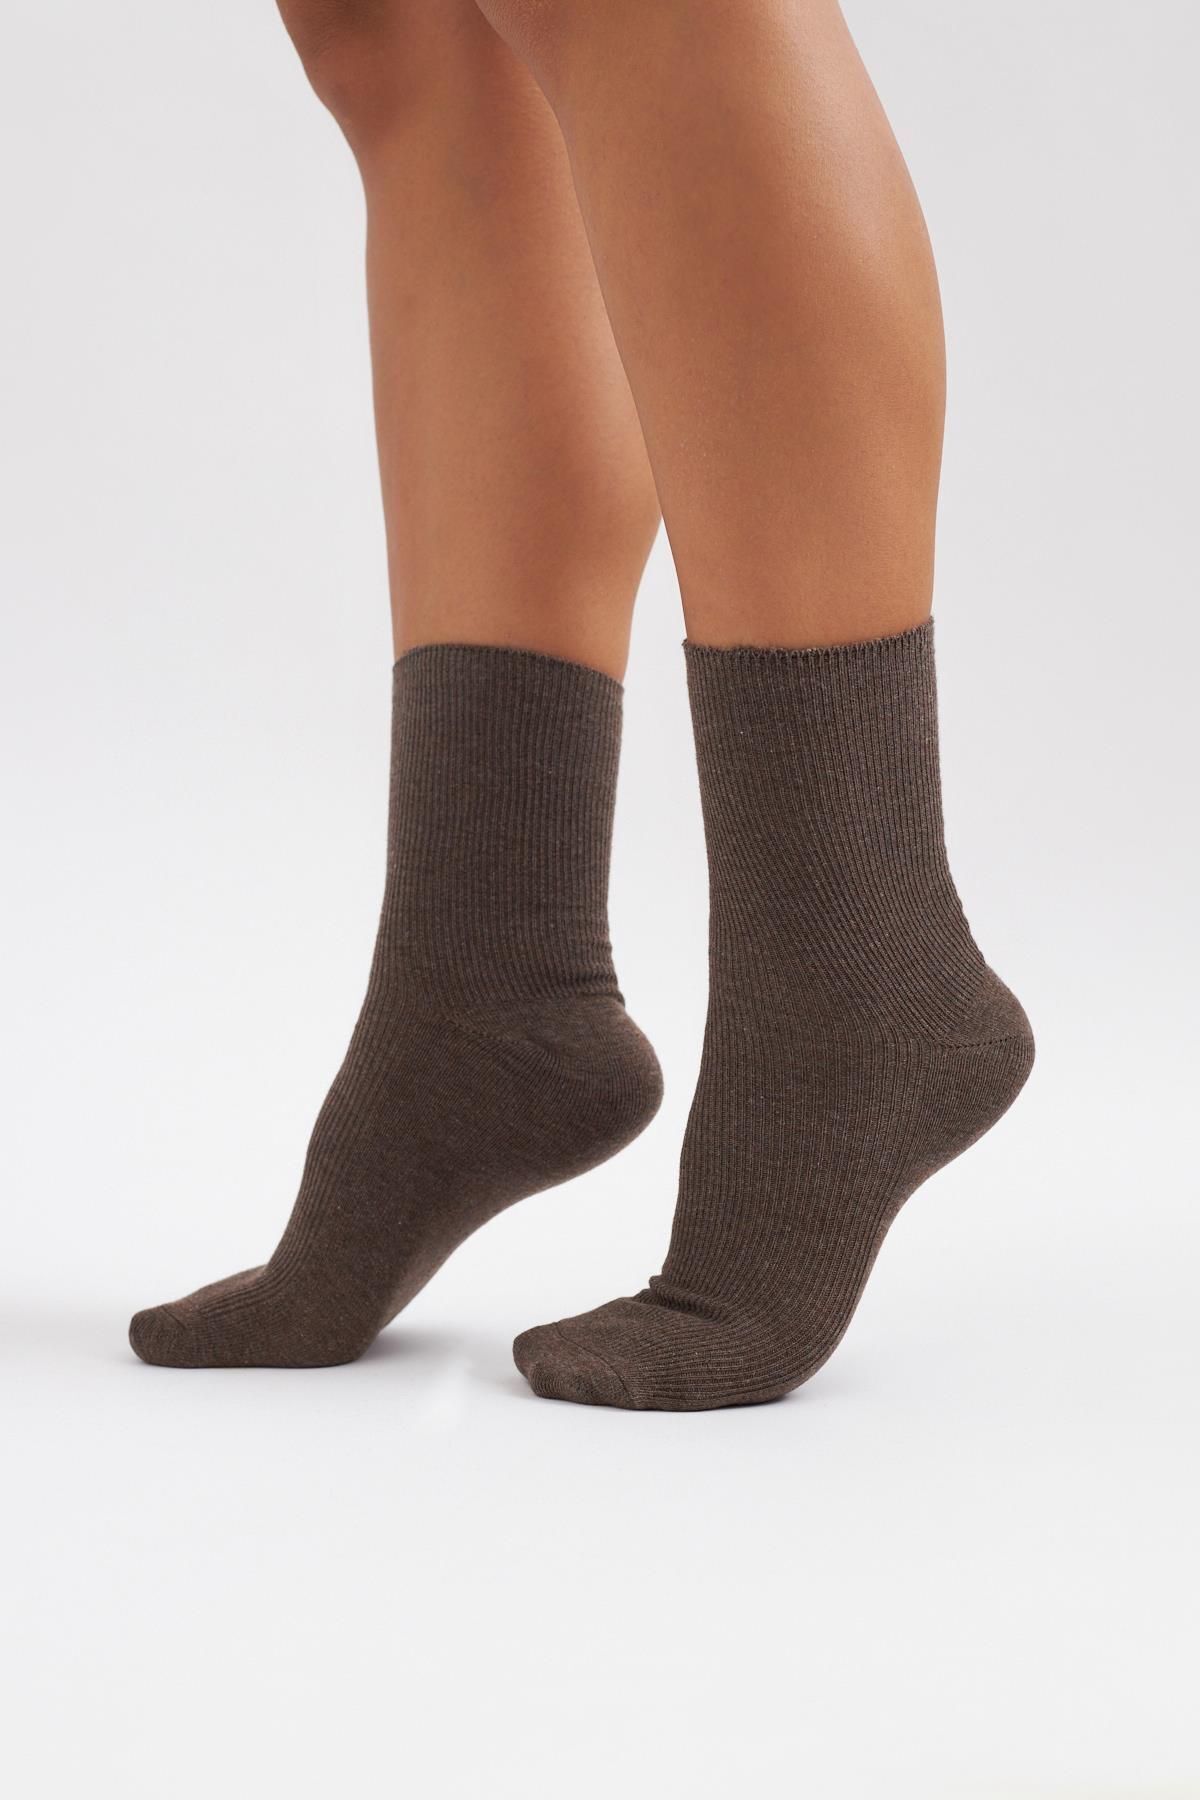 Katia & Bony Katlanabilir Soket Çorap Kahverengi